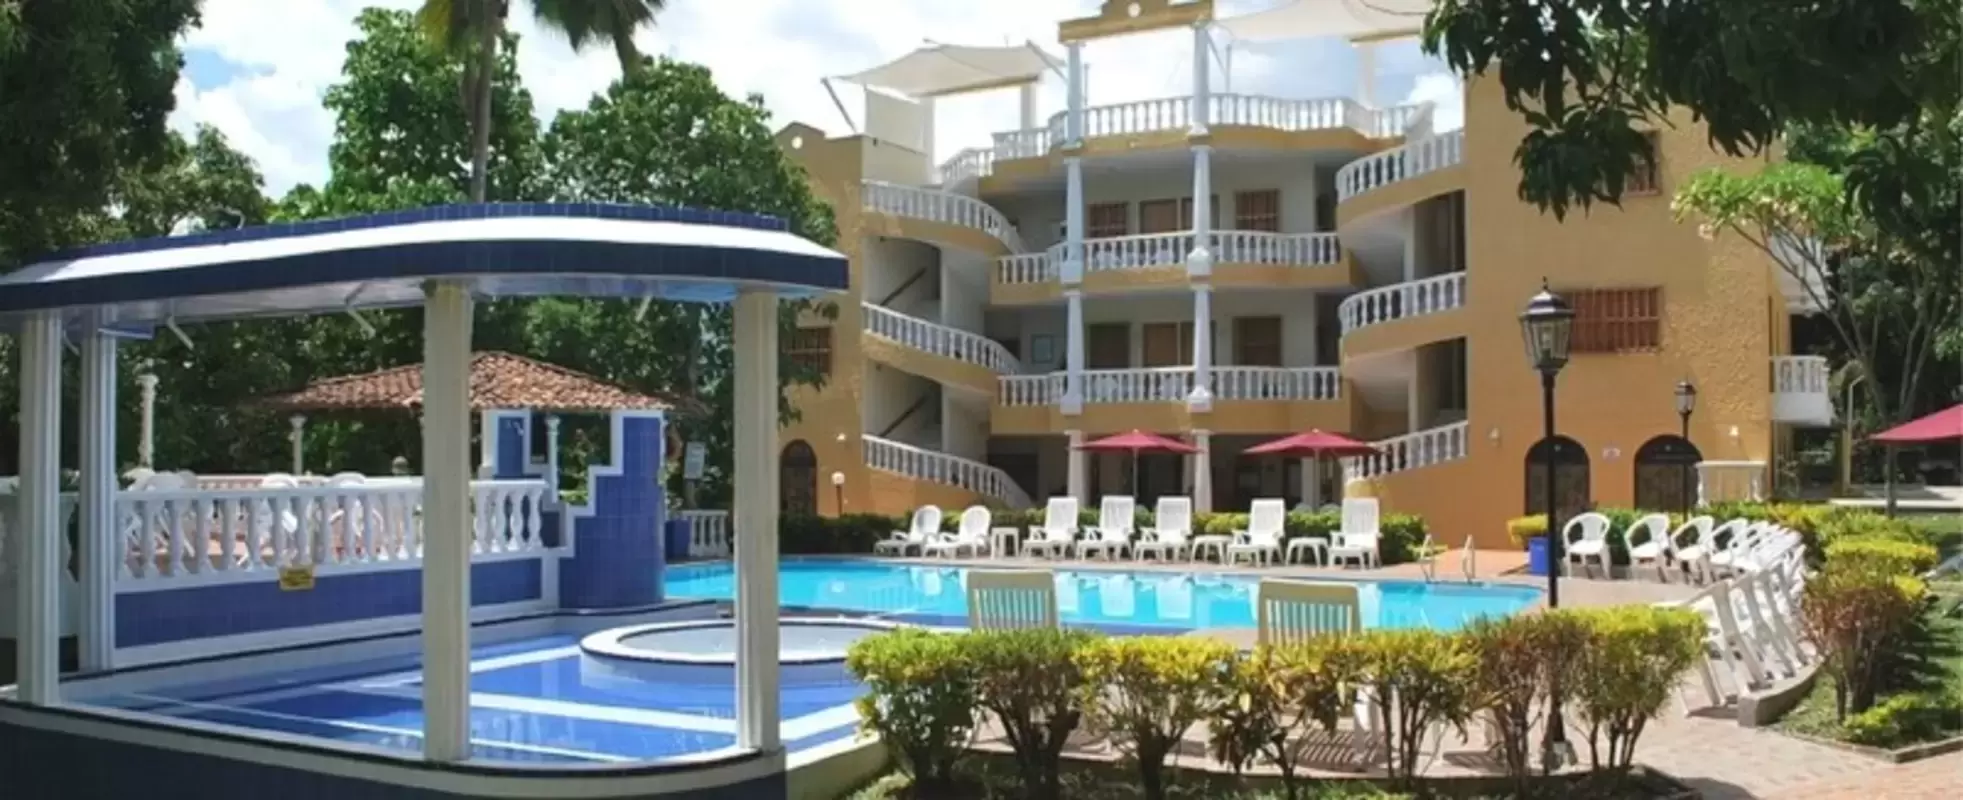 Hotel Bonaire Campestre - Sopetrn